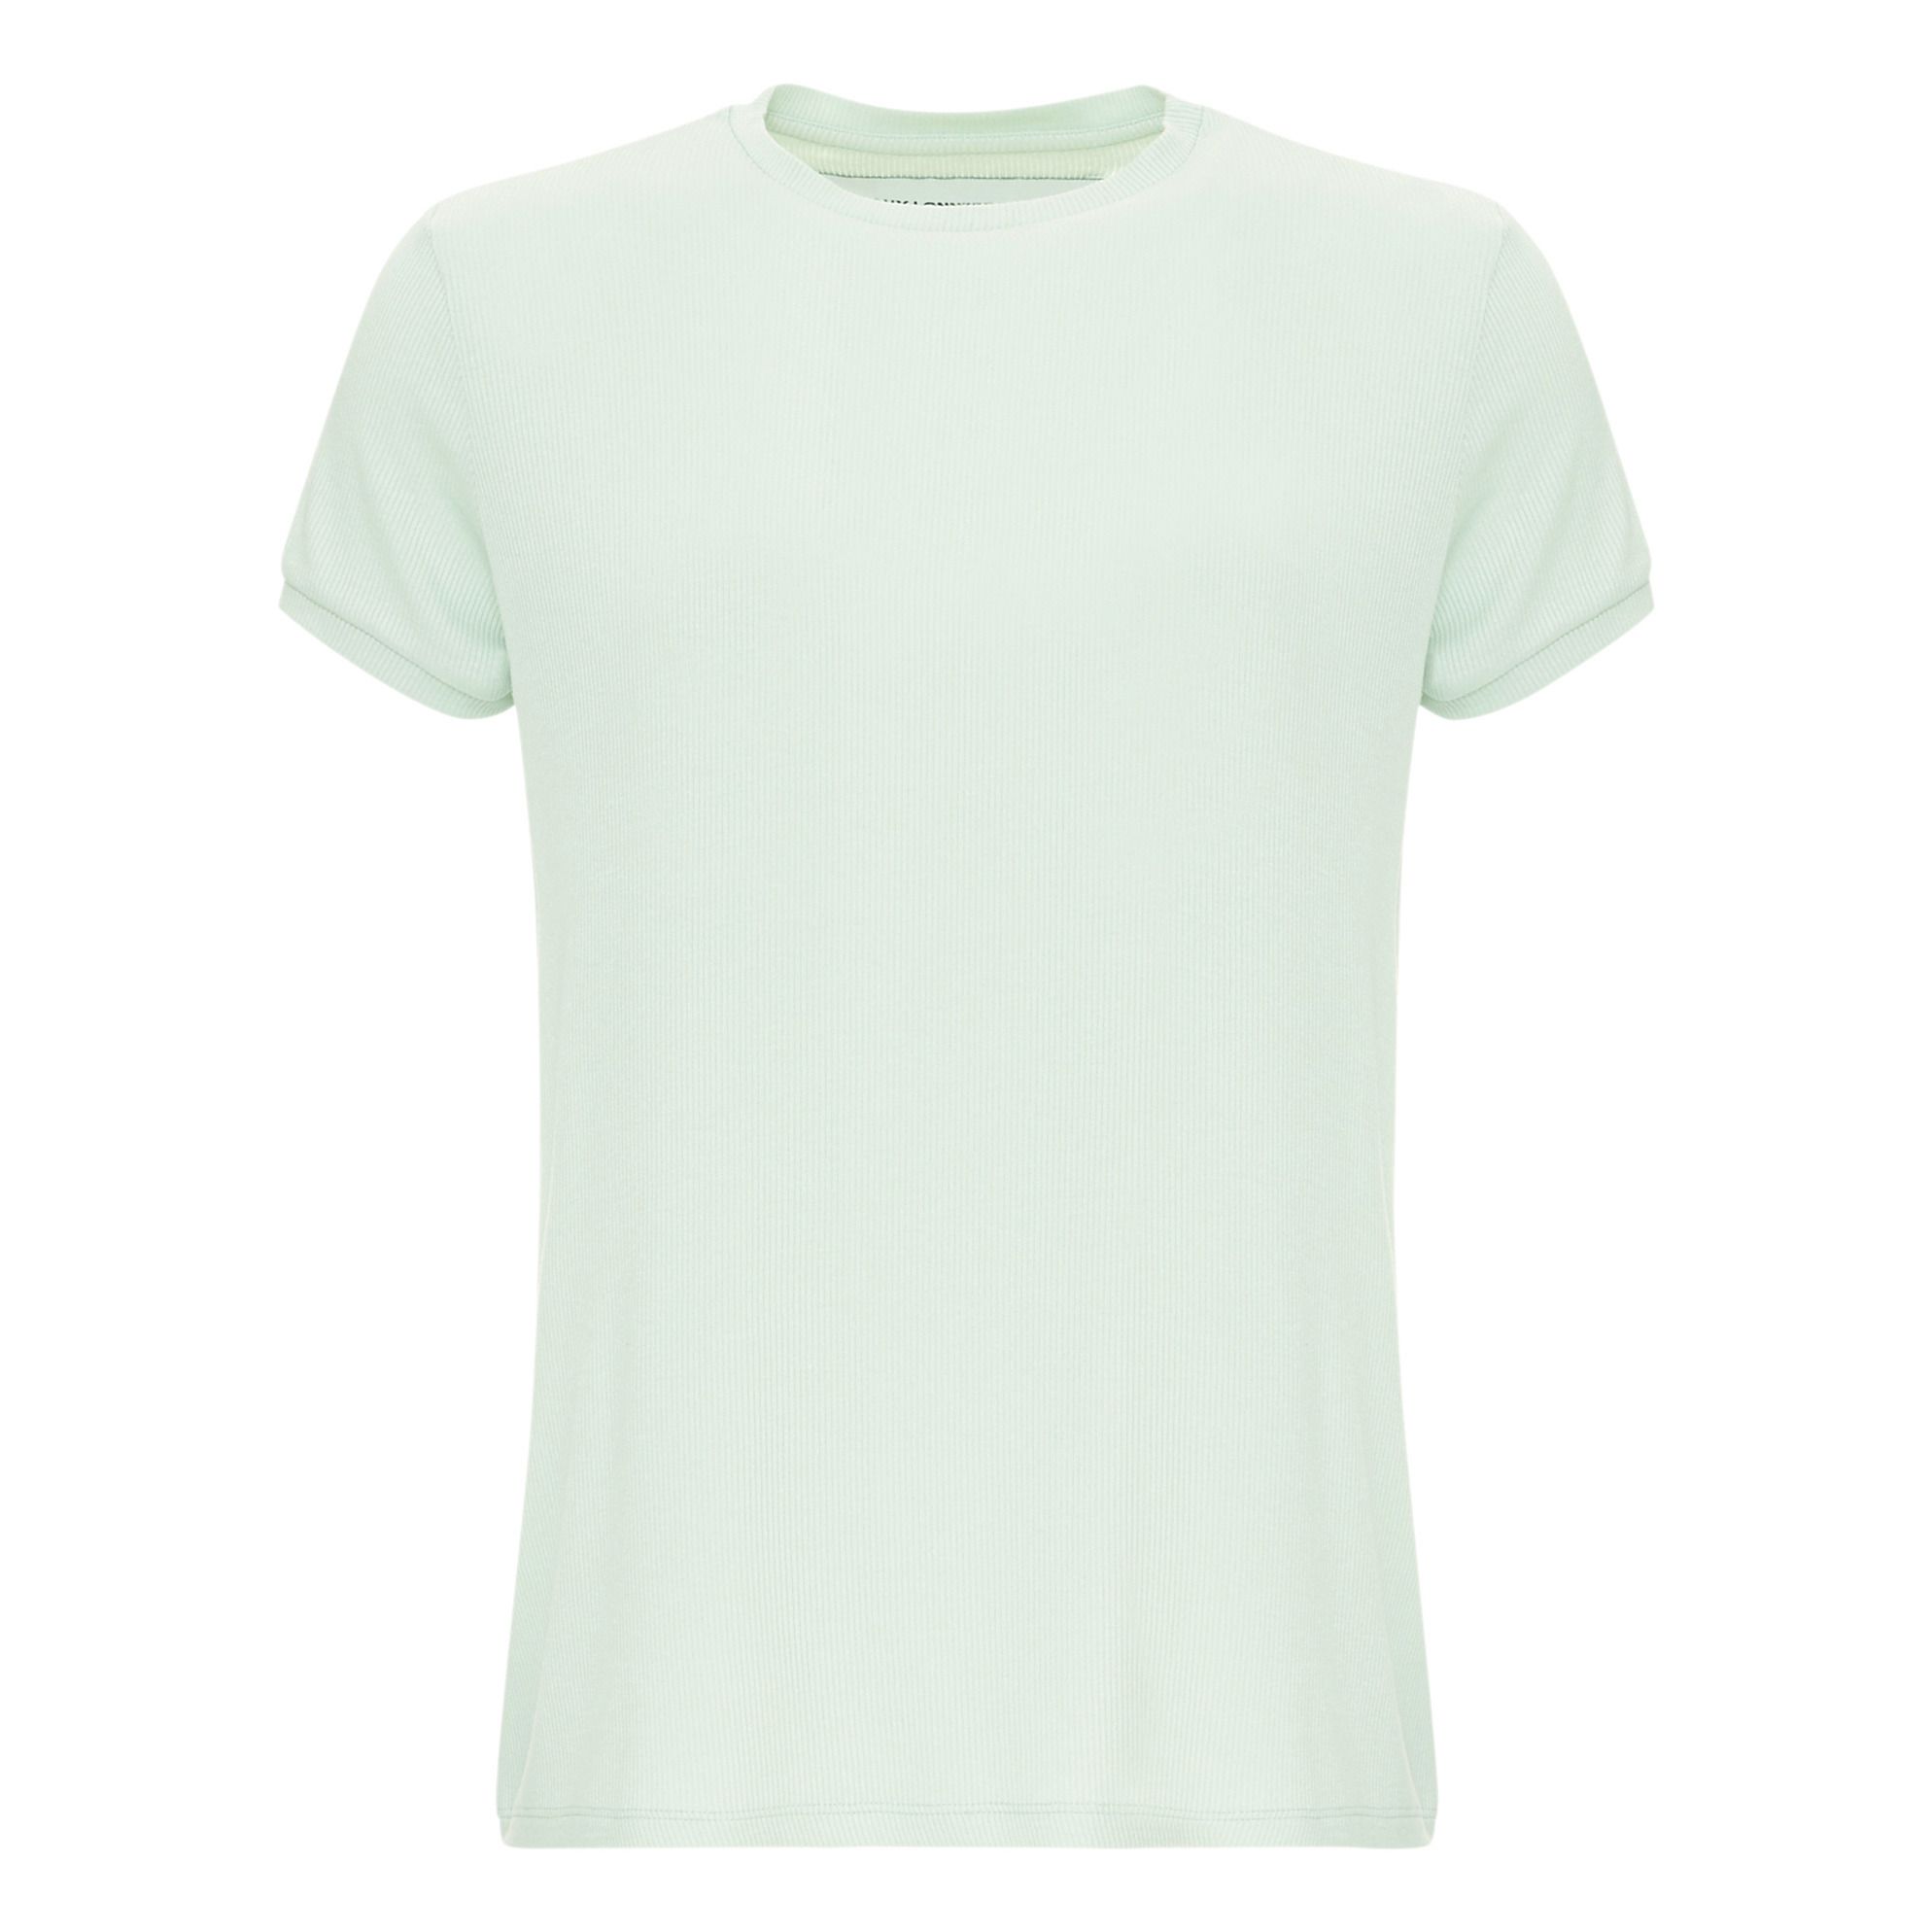 Margaux Lonnberg - T-shirt Lou - Femme - Vert d'eau